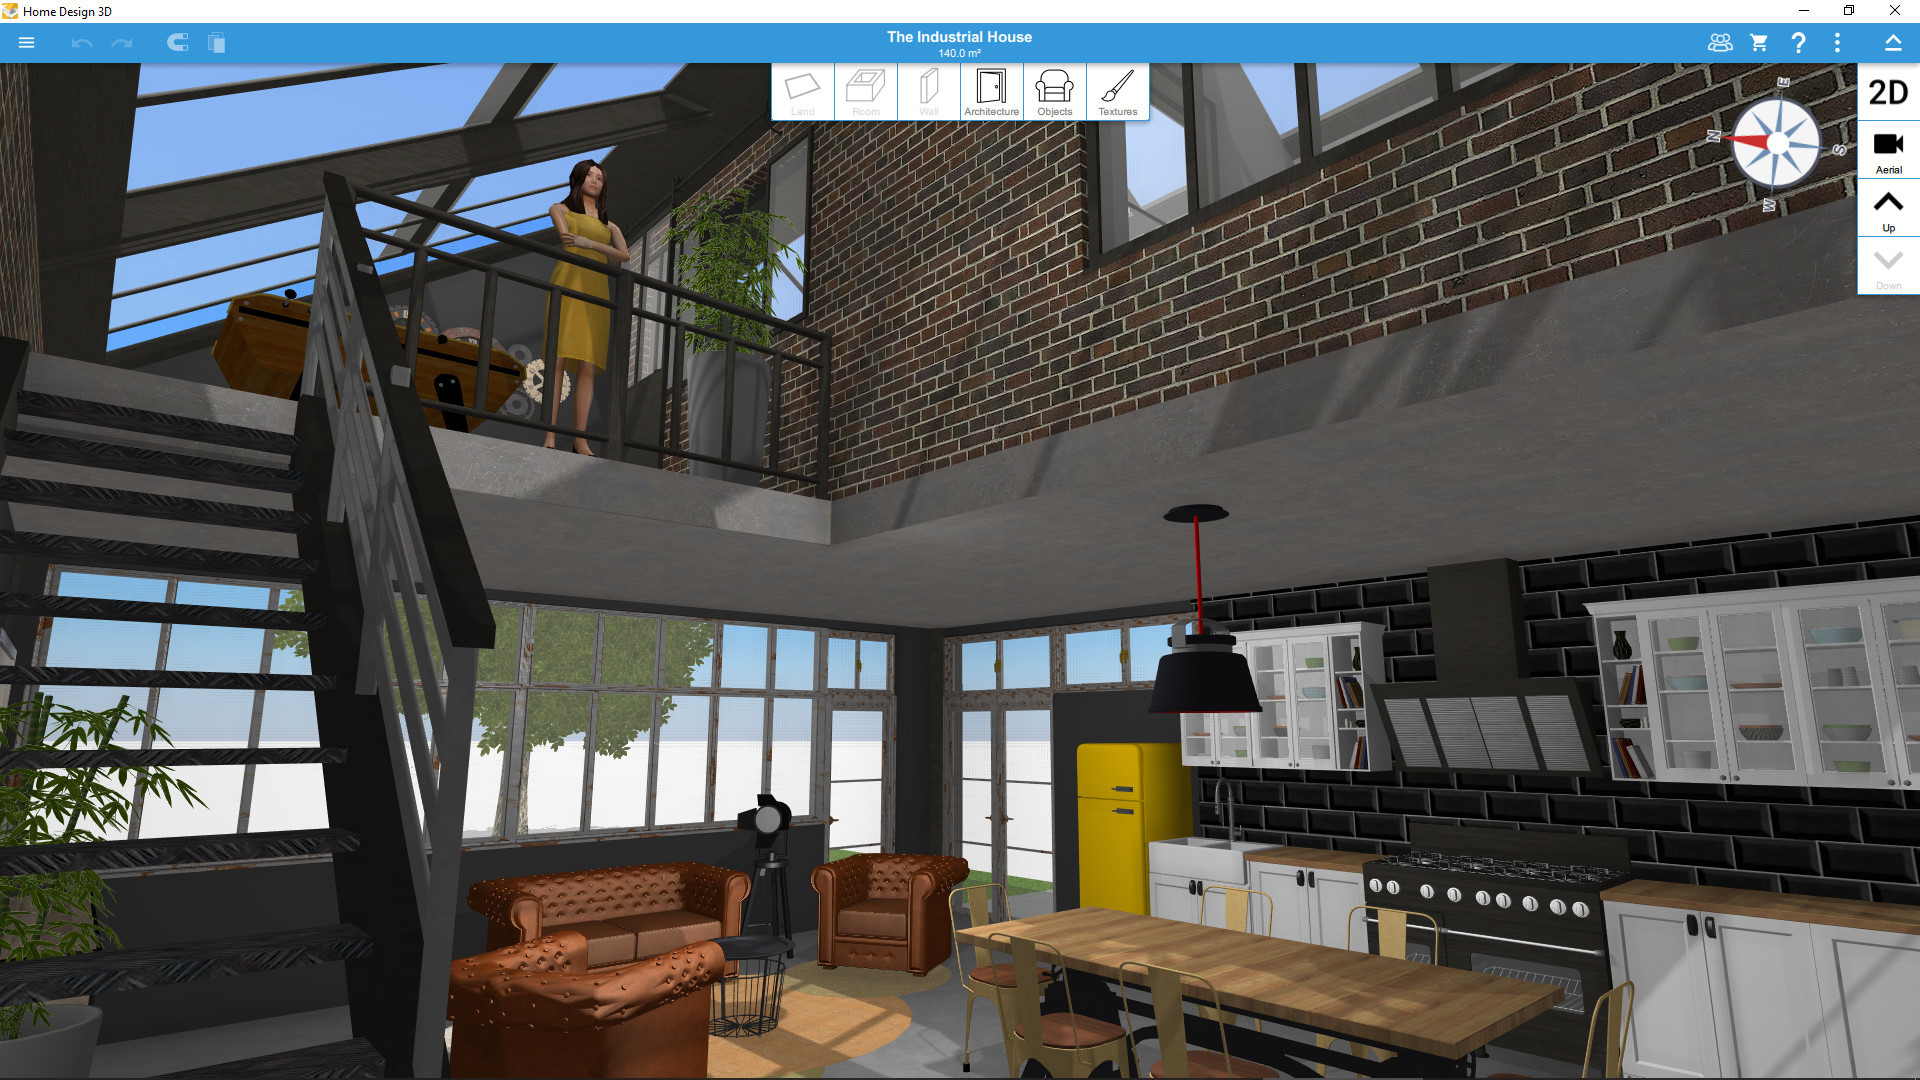 Home Design 3D pe Steam